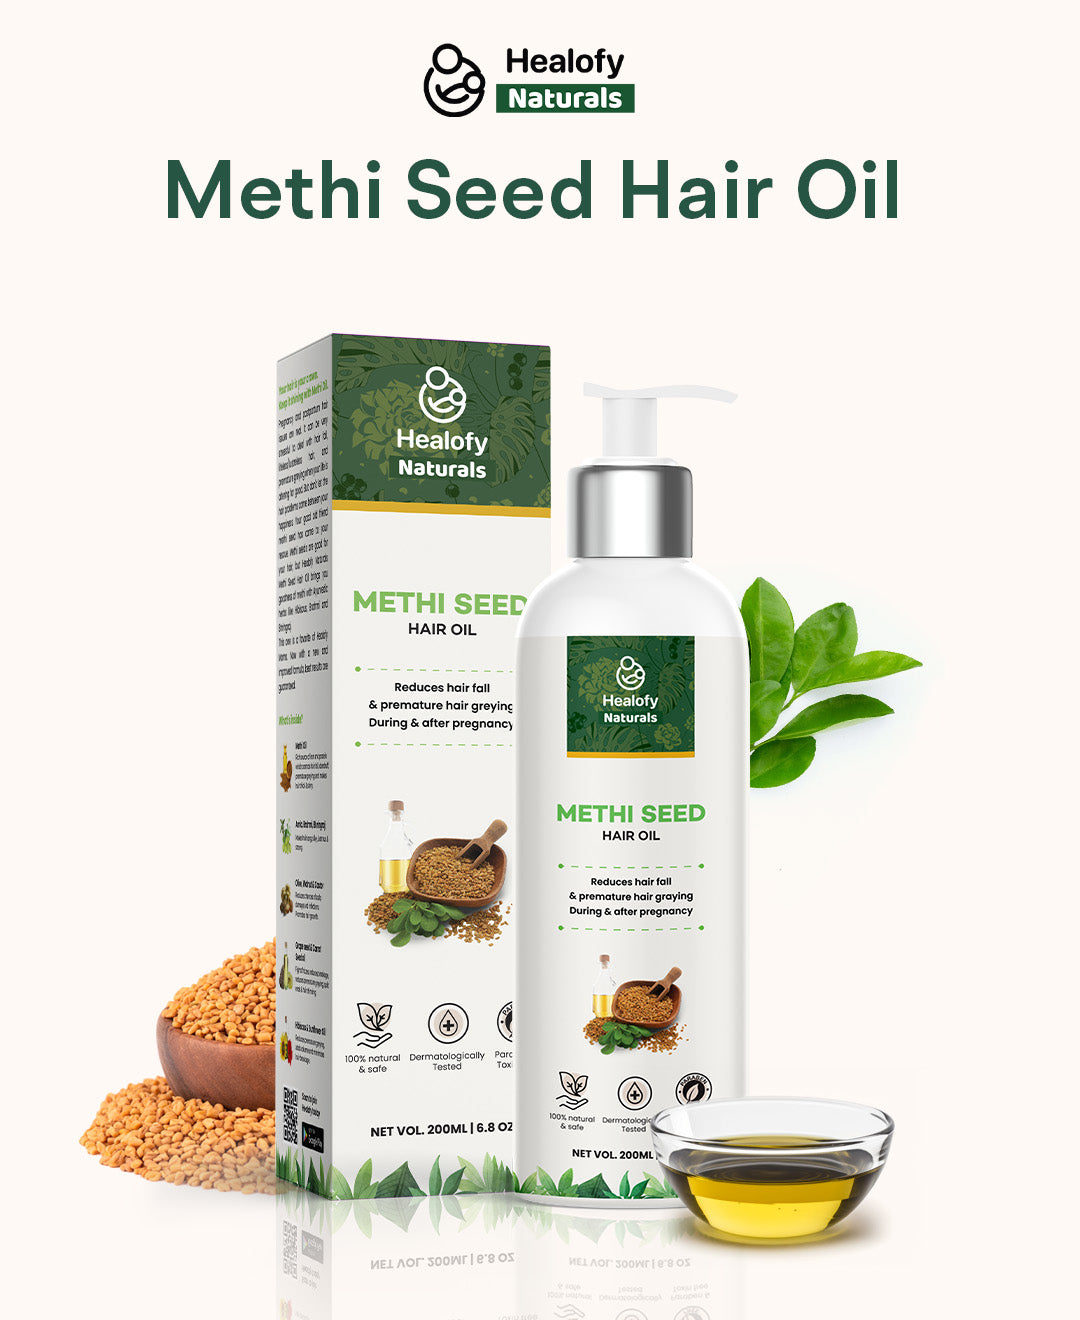 Healofy Naturals Methi Seed Hair Oil